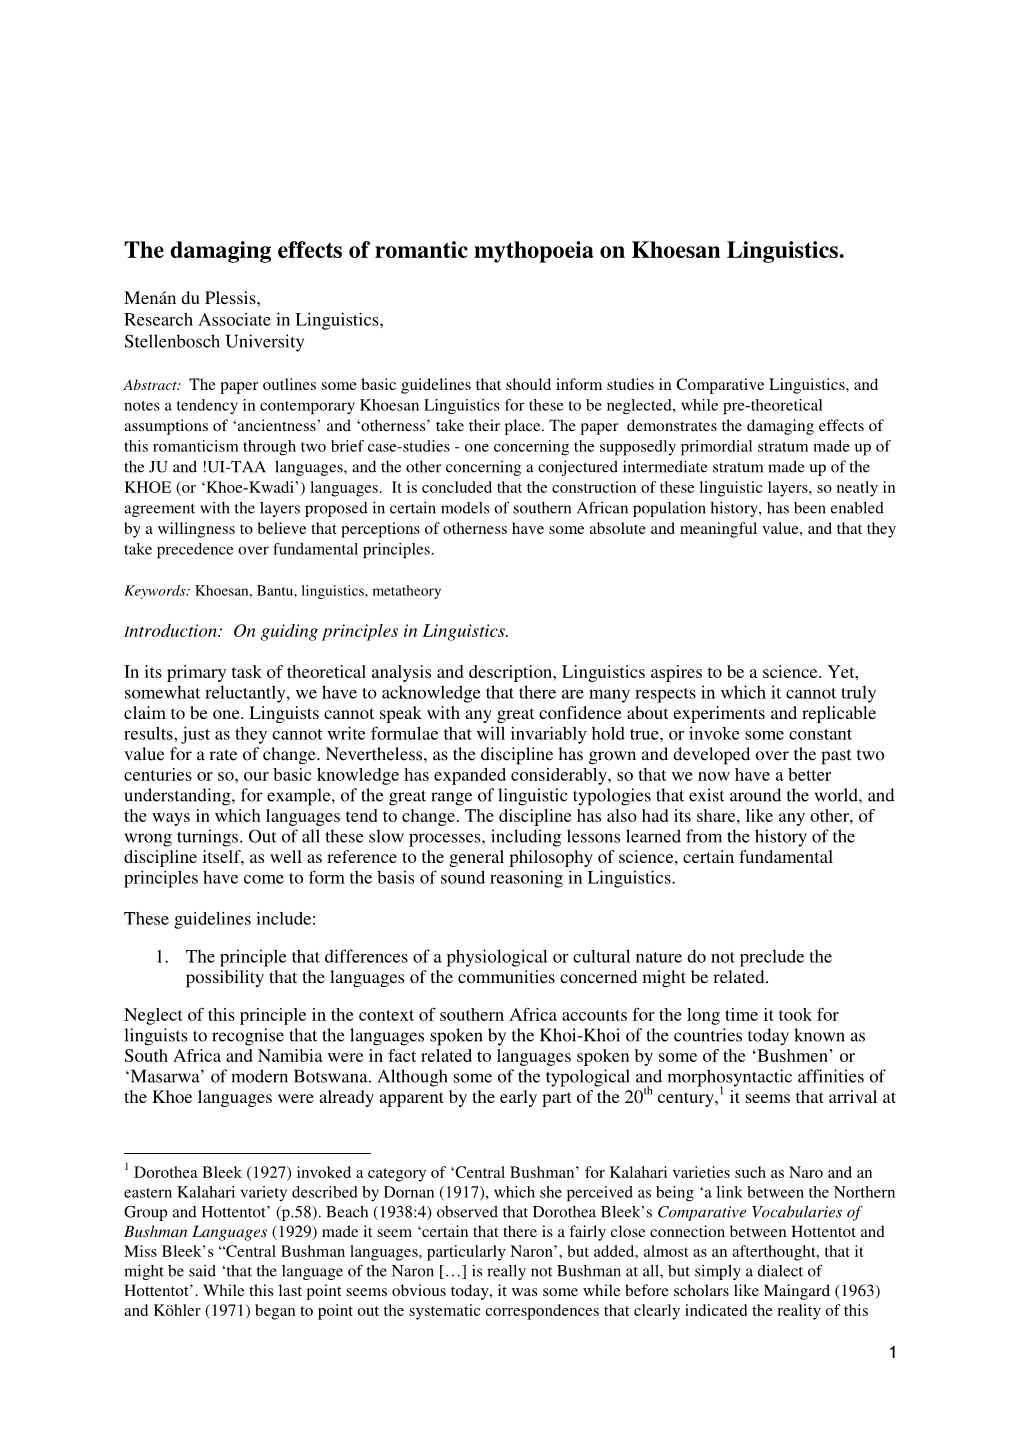 The Damaging Effects of Romantic Mythopoeia on Khoesan Linguistics